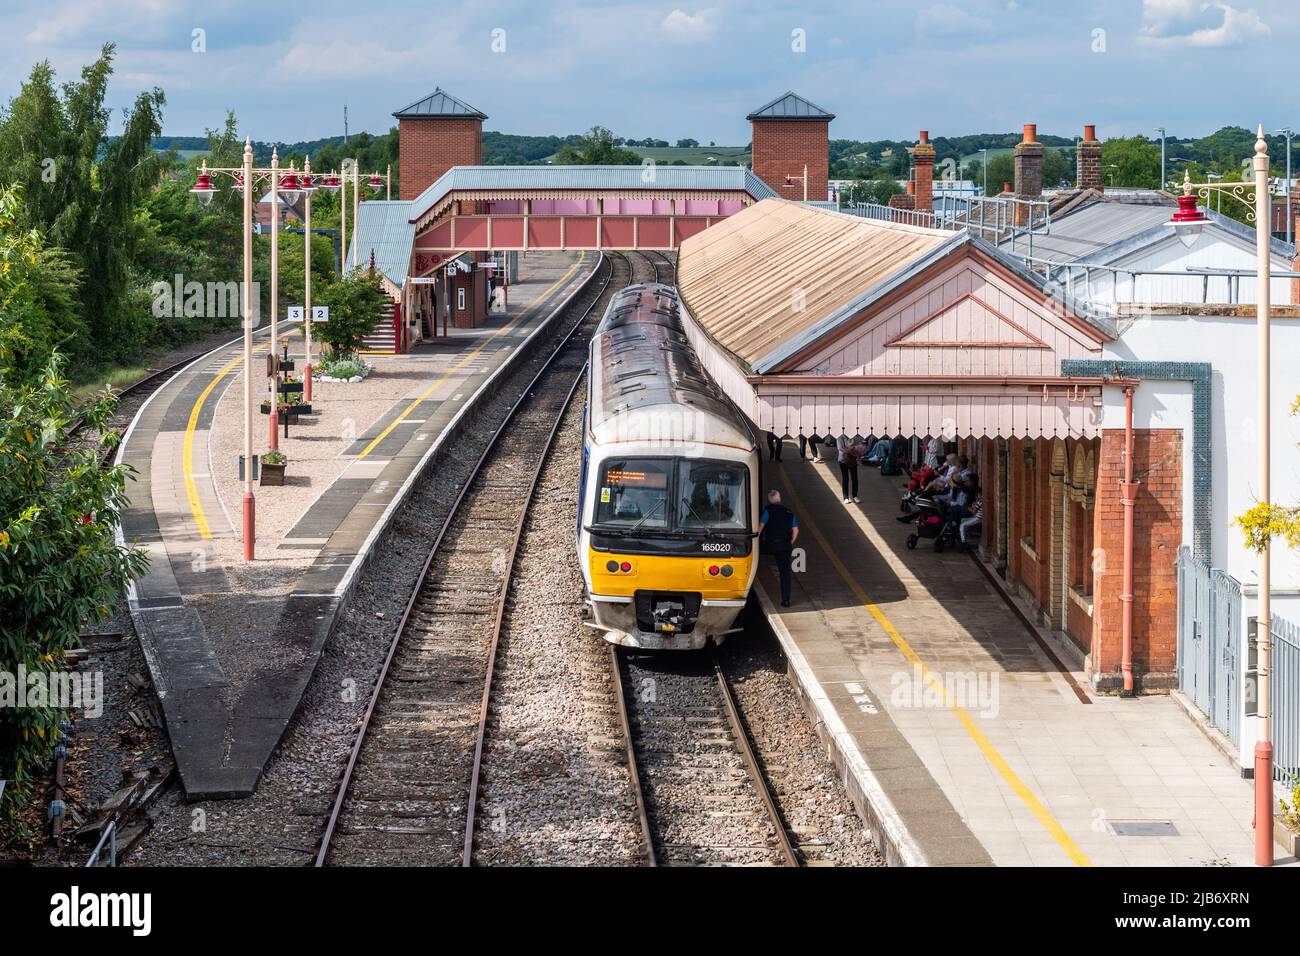 Stratford-upon-Avon Railway Station, Stratford-upon-Avon, Warwickshire, UK. Stock Photo